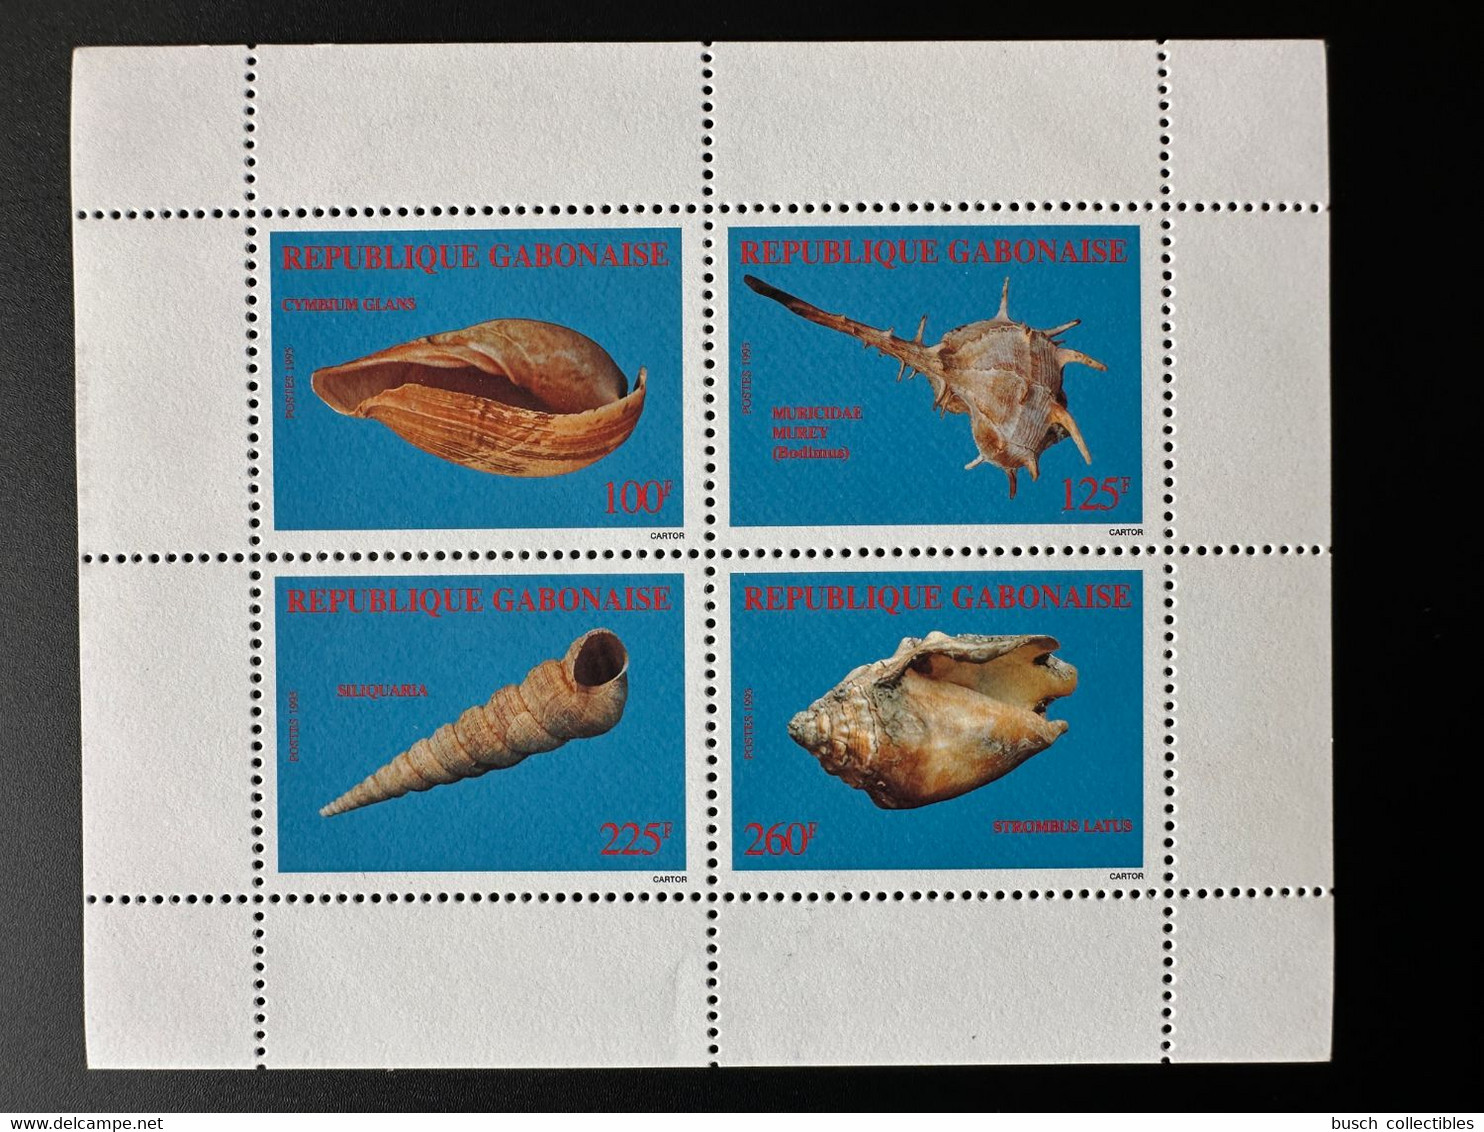 Gabon Gabun 1995 Mi. Bl. 78 Coquillages Shells Crustacés Crustaceans RARE ! - Conchiglie